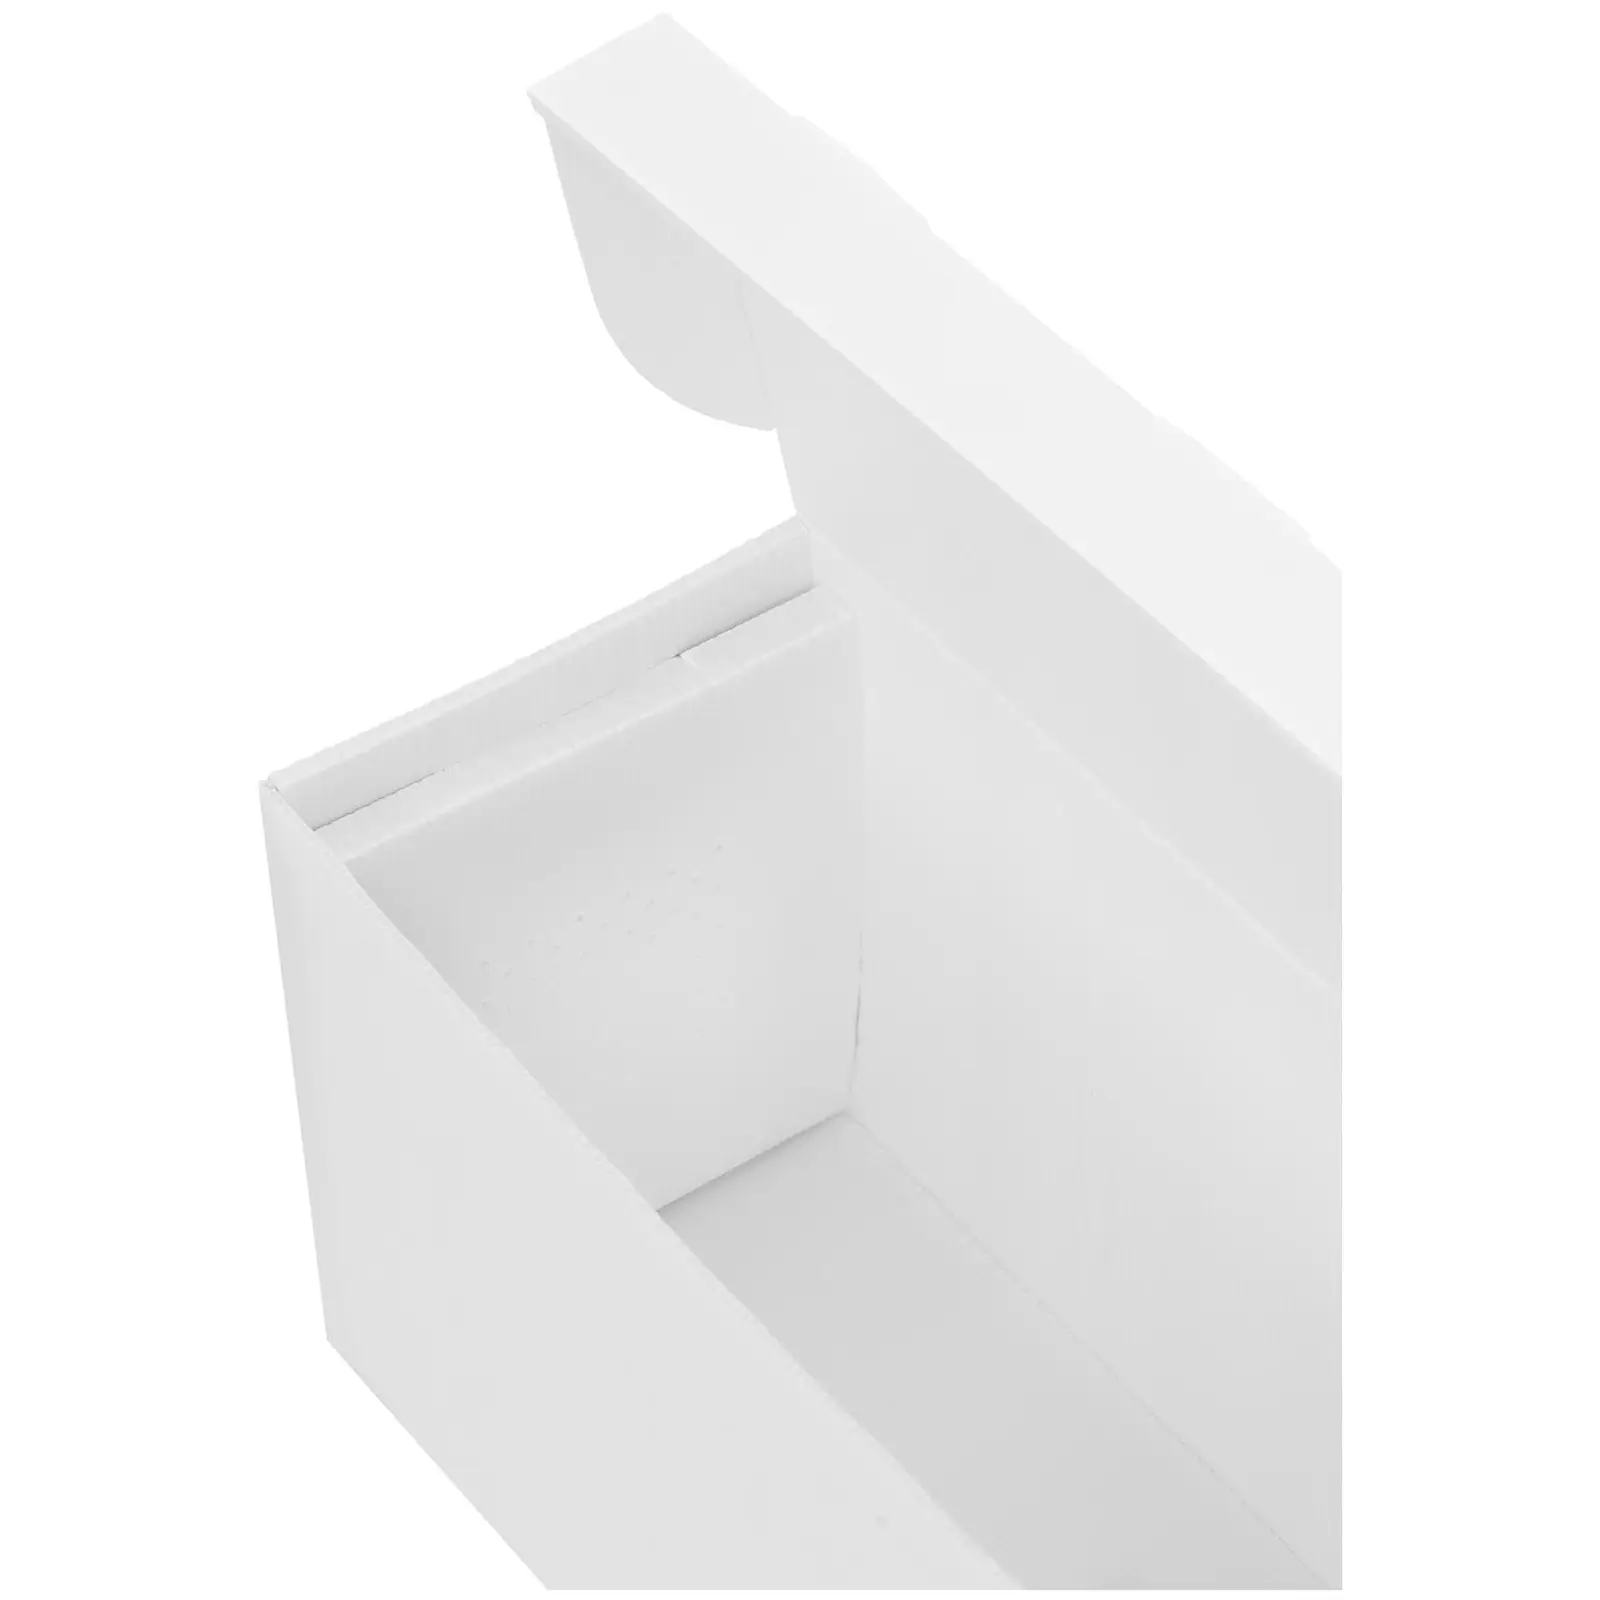 Langstroth Nuc Box - made of plastic (PP) - for 5 frames